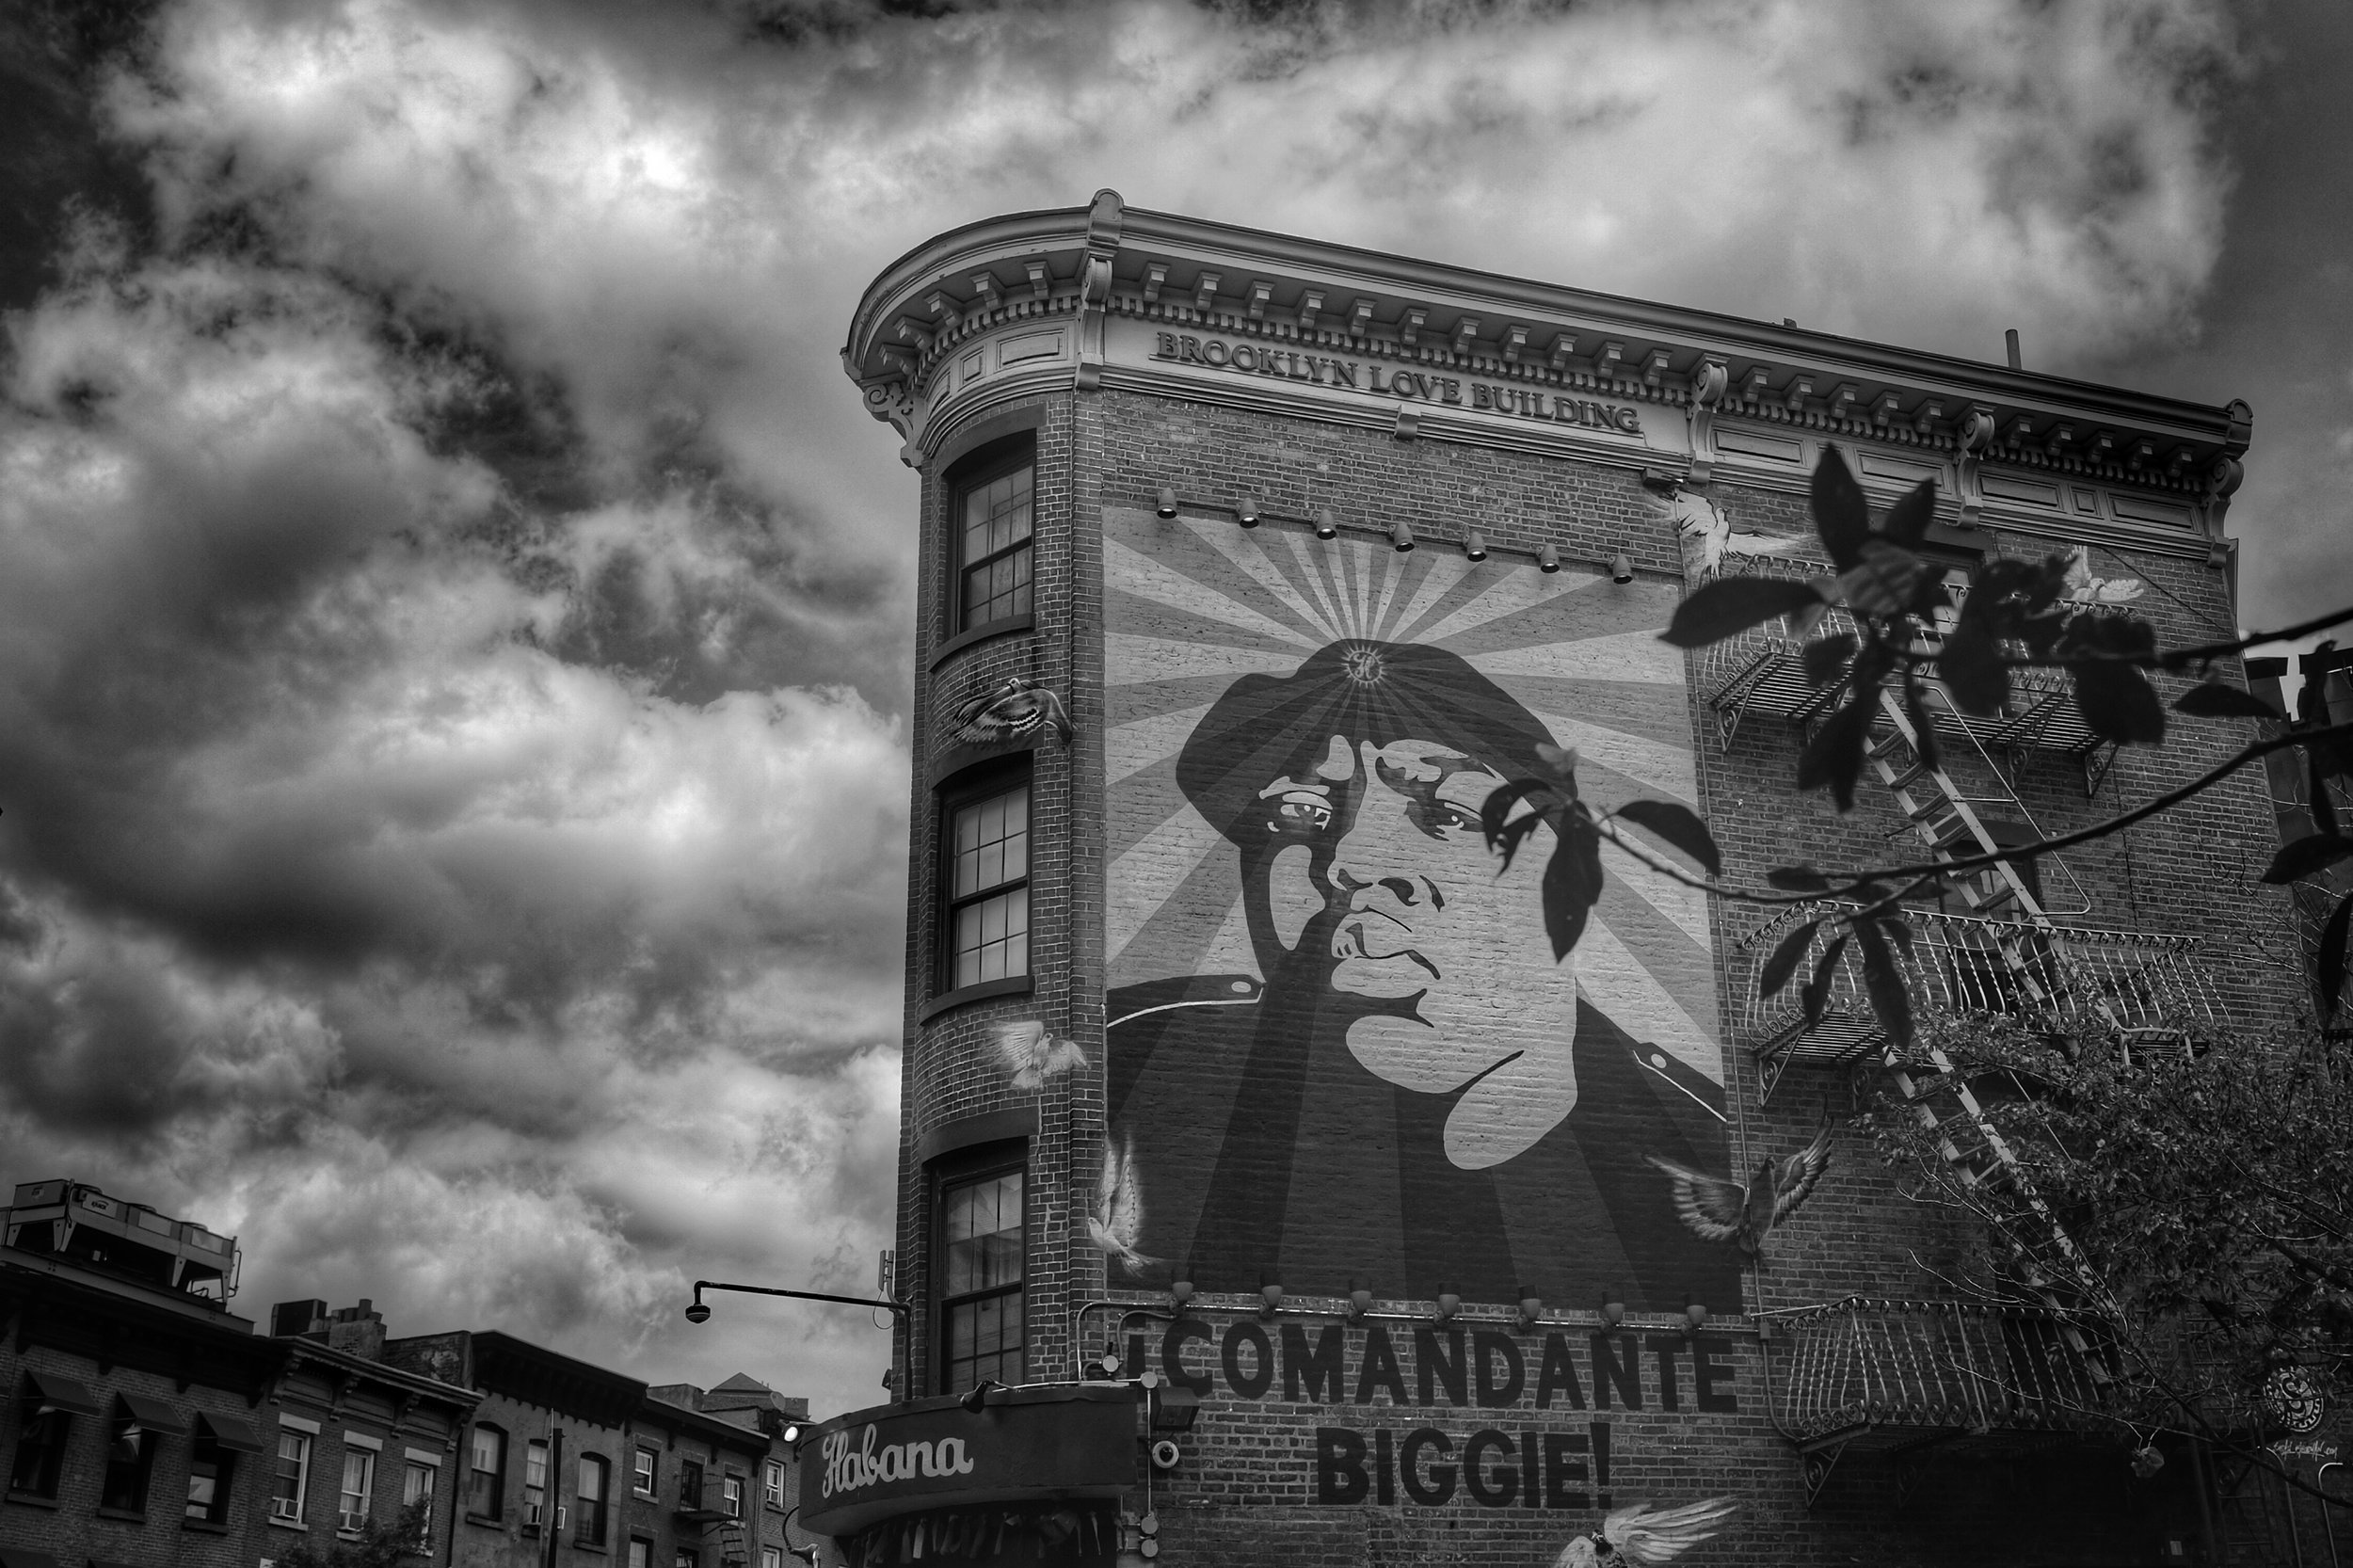 Comandante Biggie. Brooklyn Love Building. Fort Greene. Brooklyn. New York. 2016.